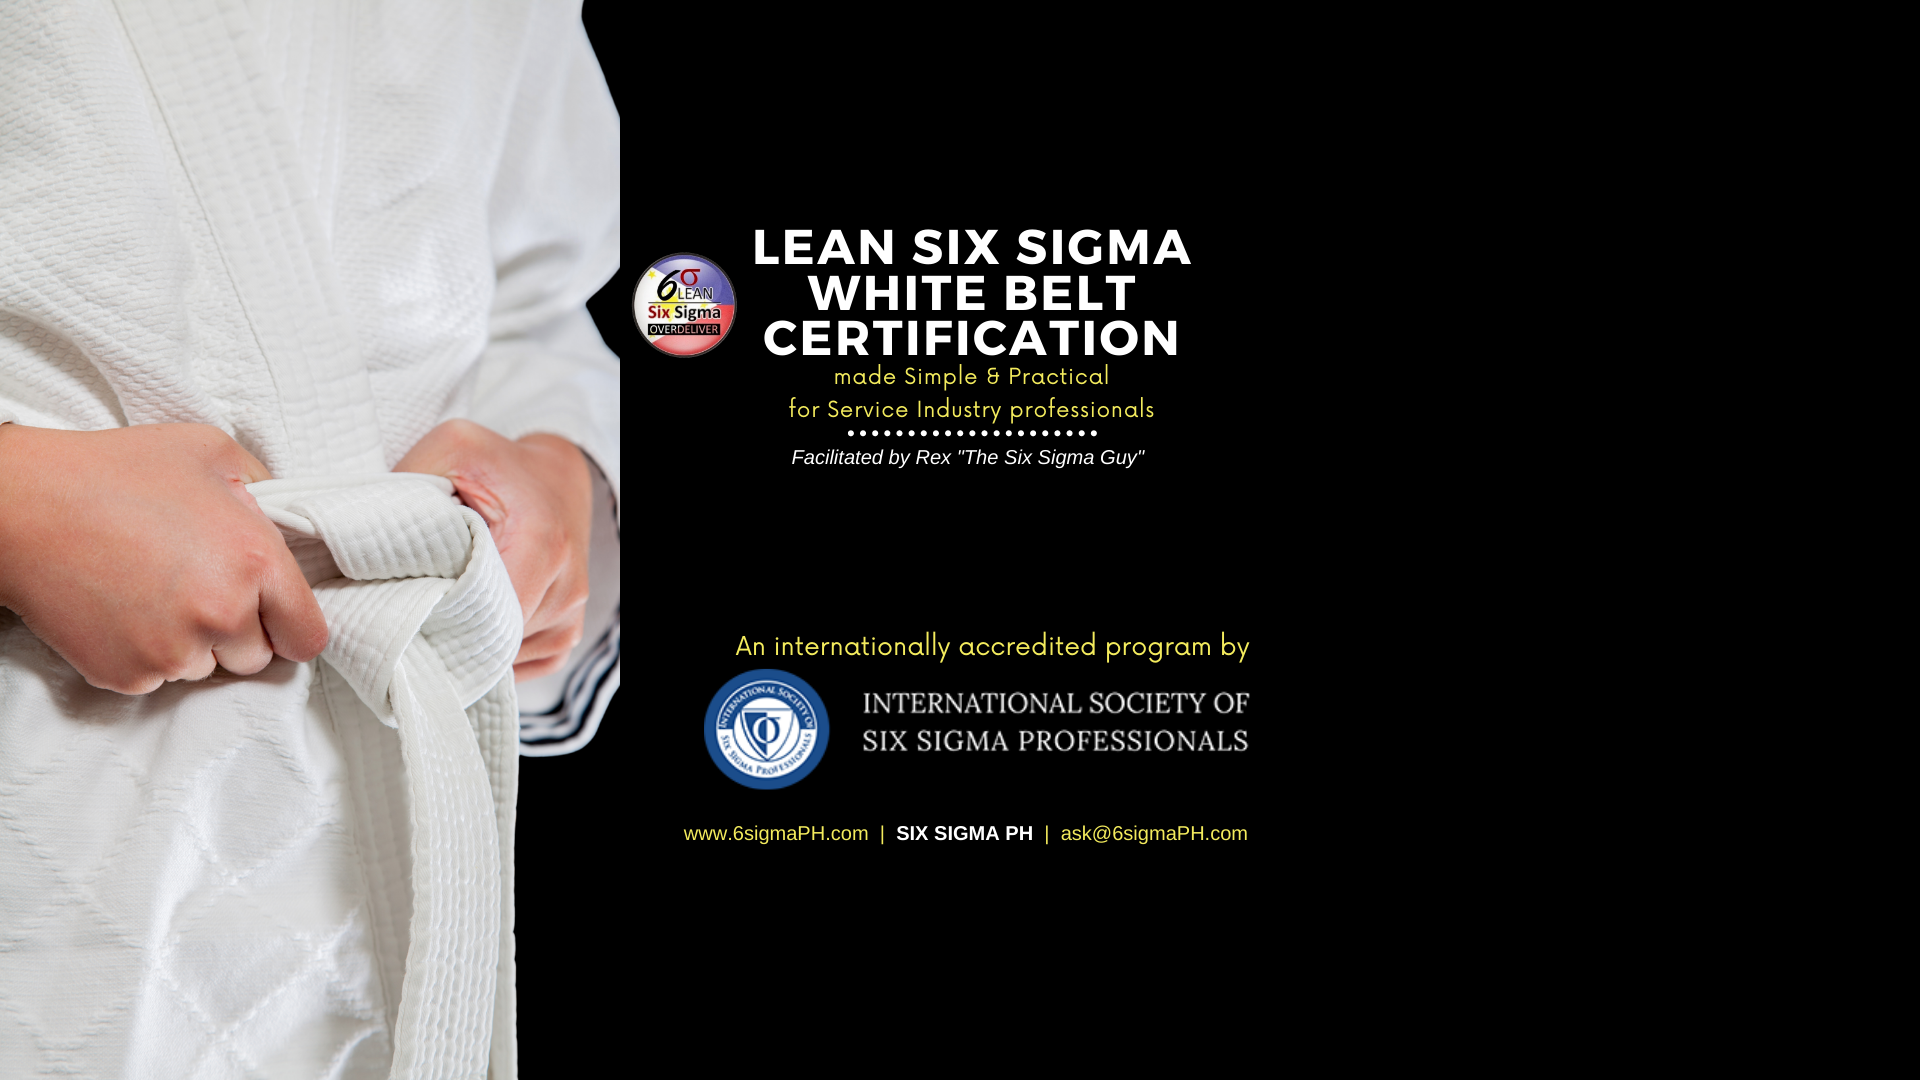 Lean Six Sigma White Belt Certification Program Six Sigma PH